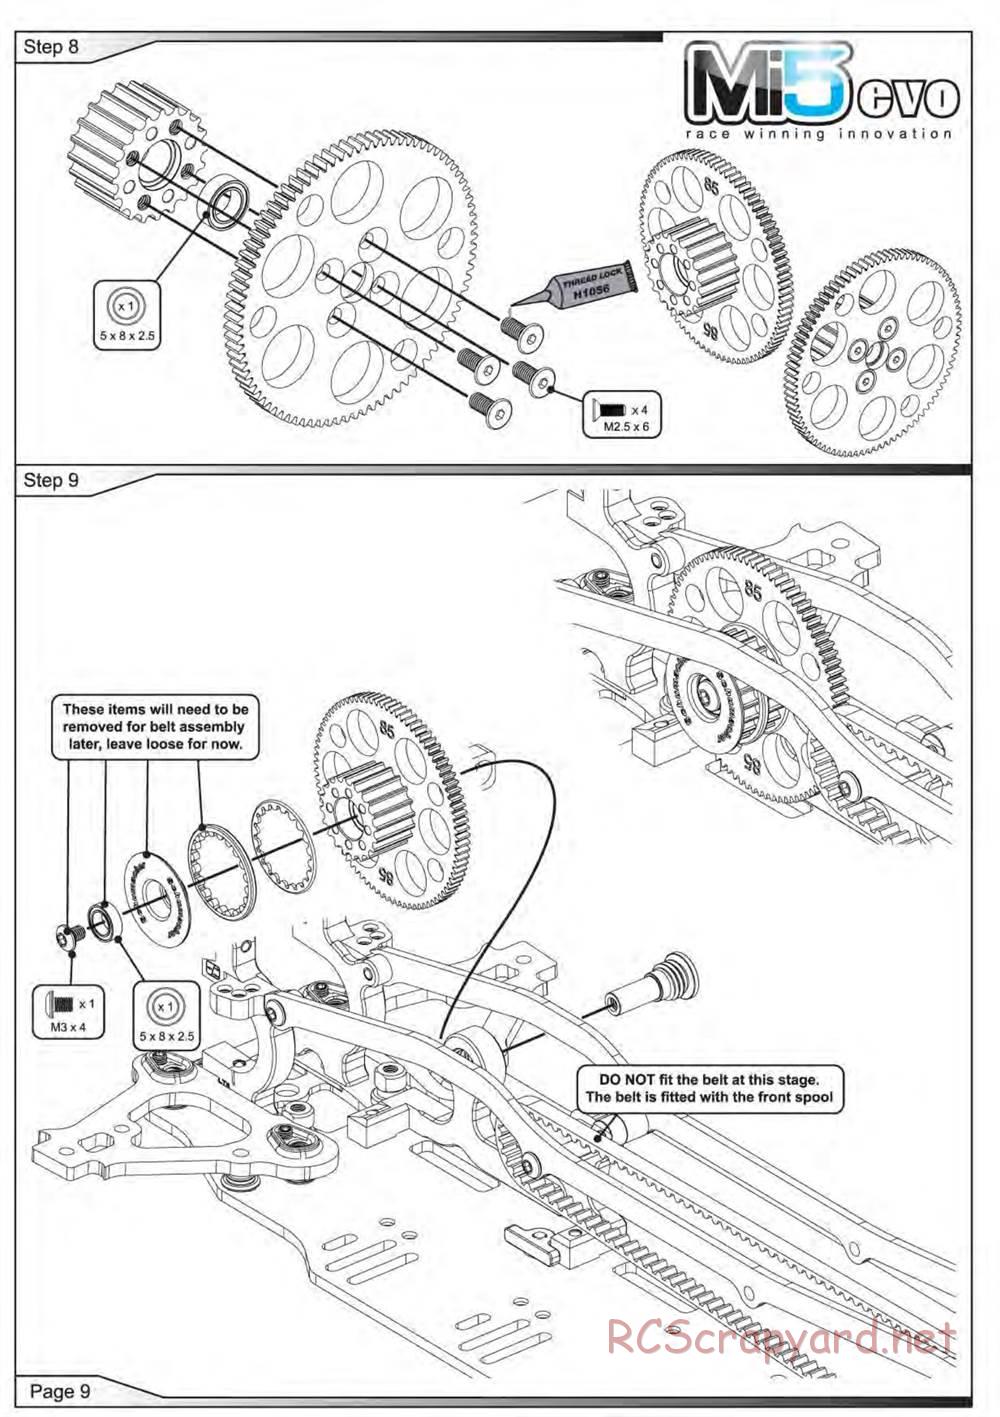 Schumacher - Mi5 Evo - Manual - Page 10